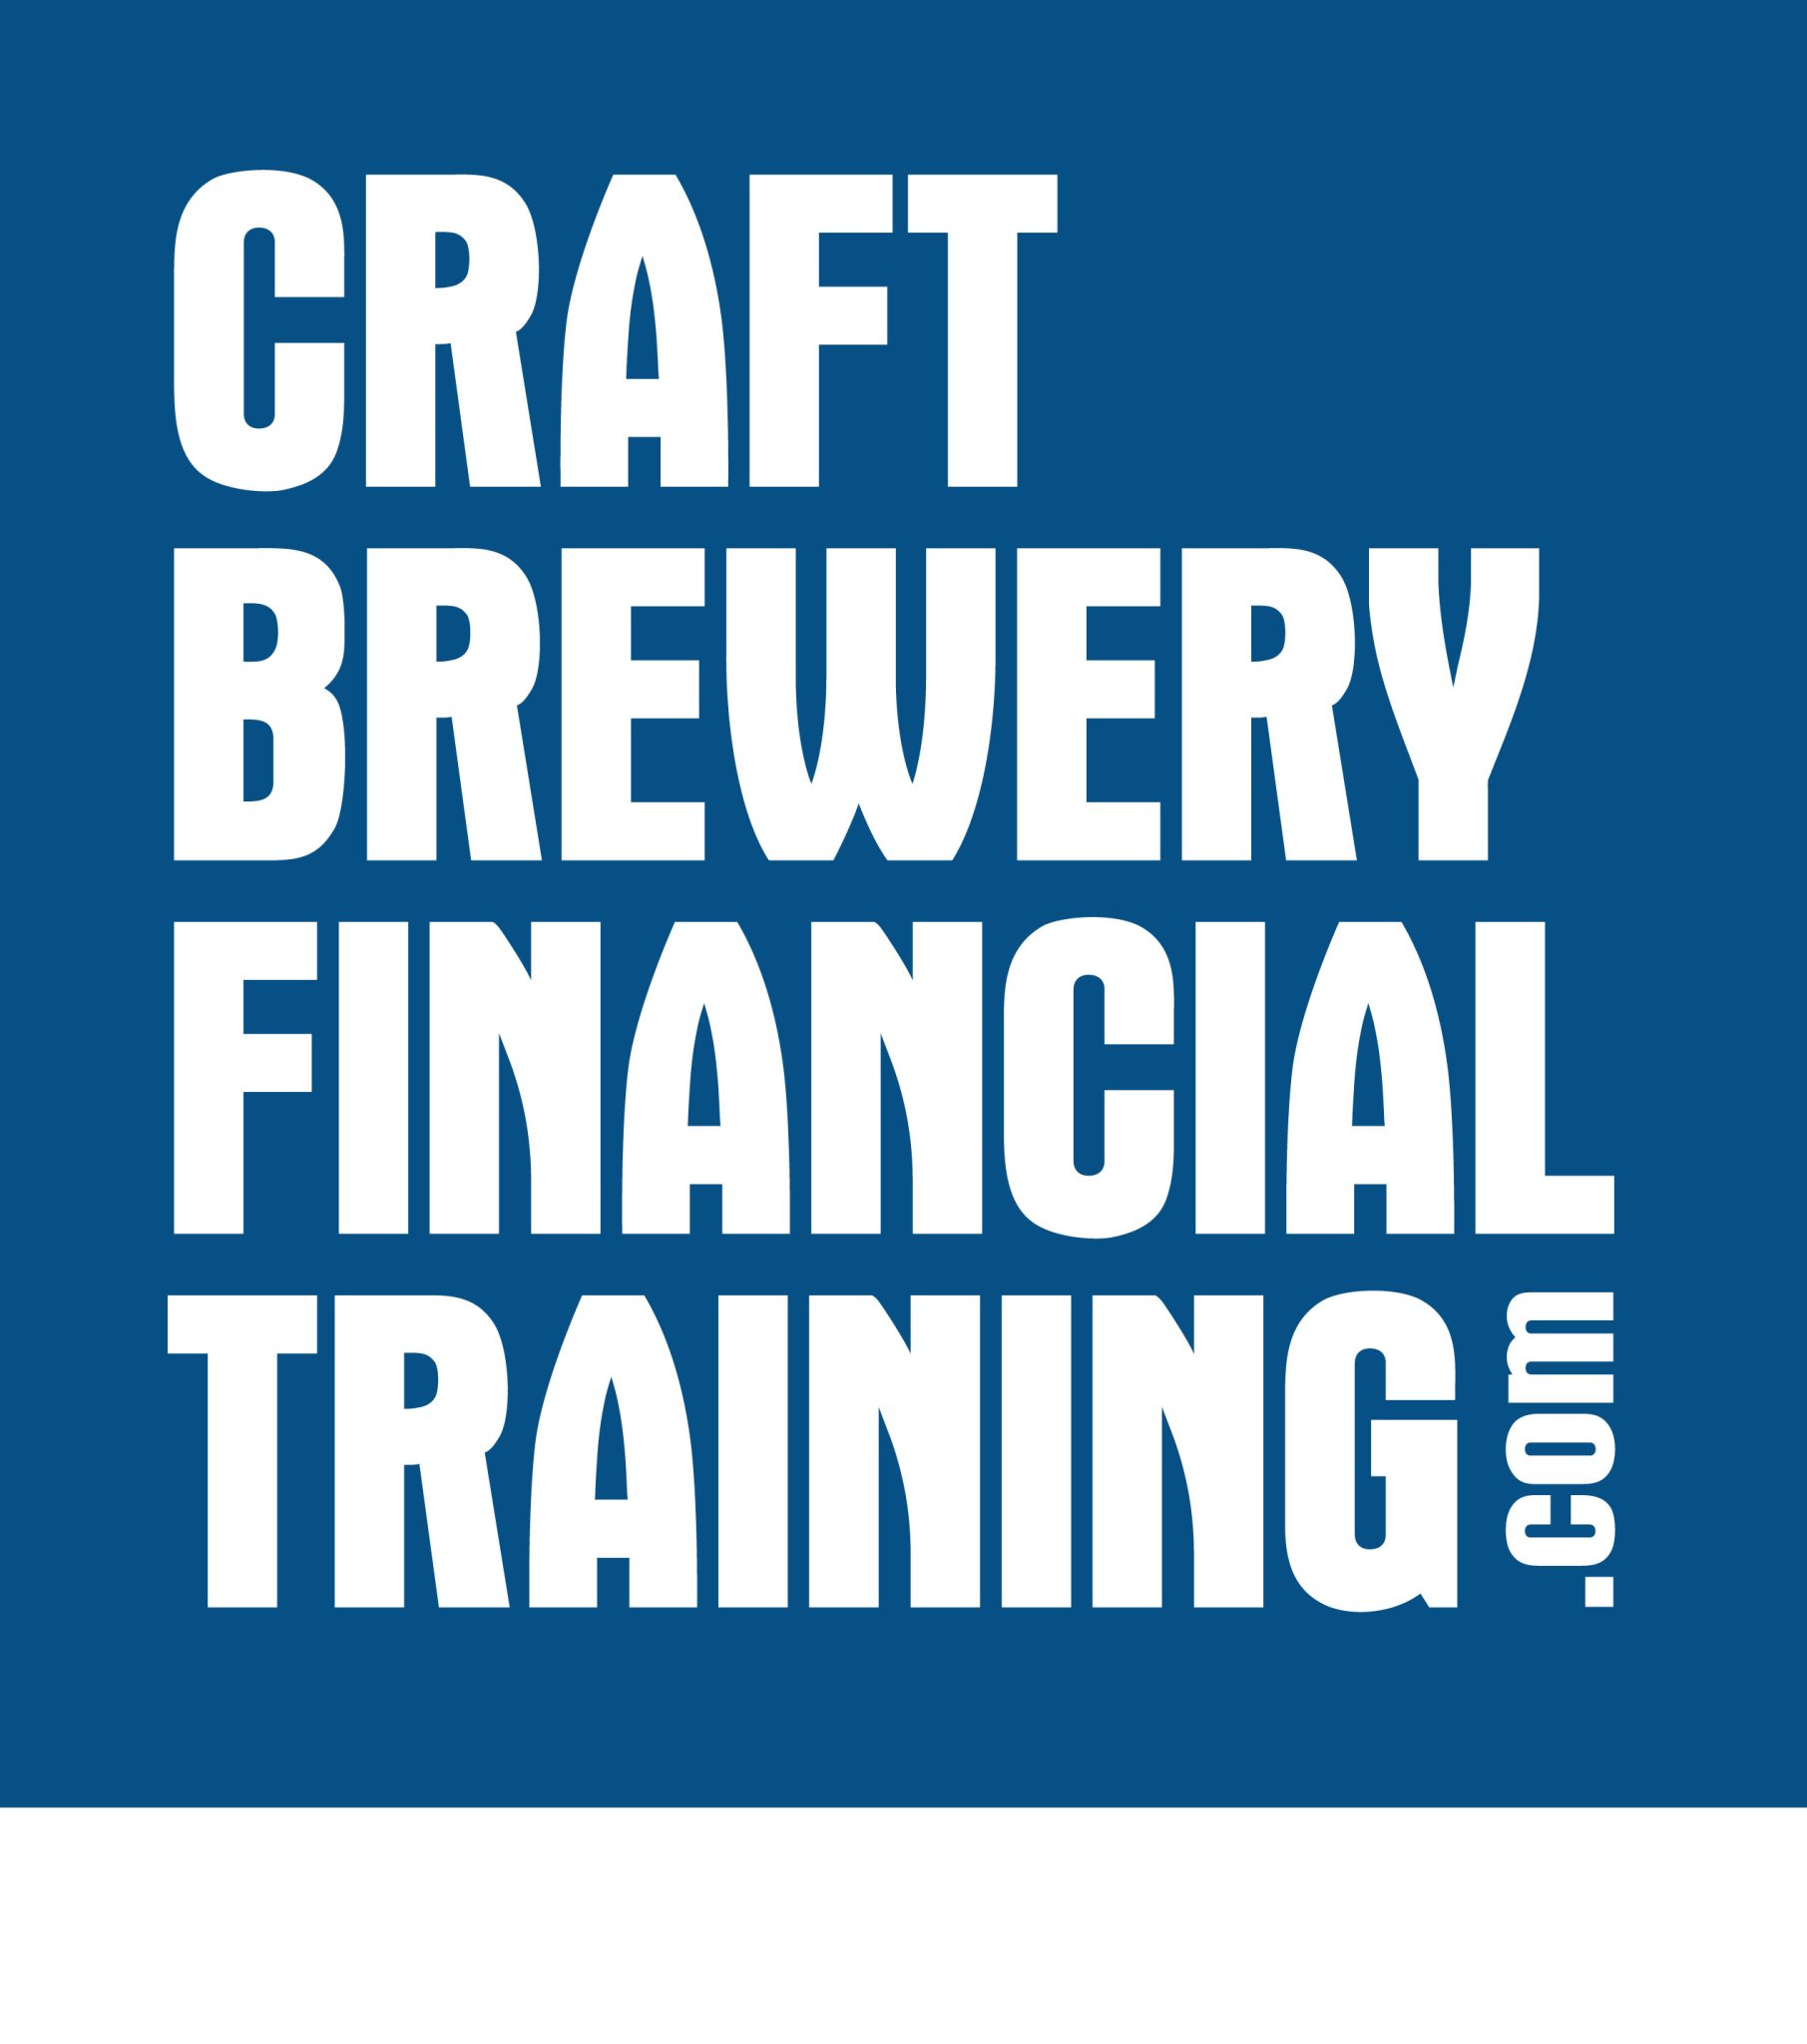 craft brewery financial training